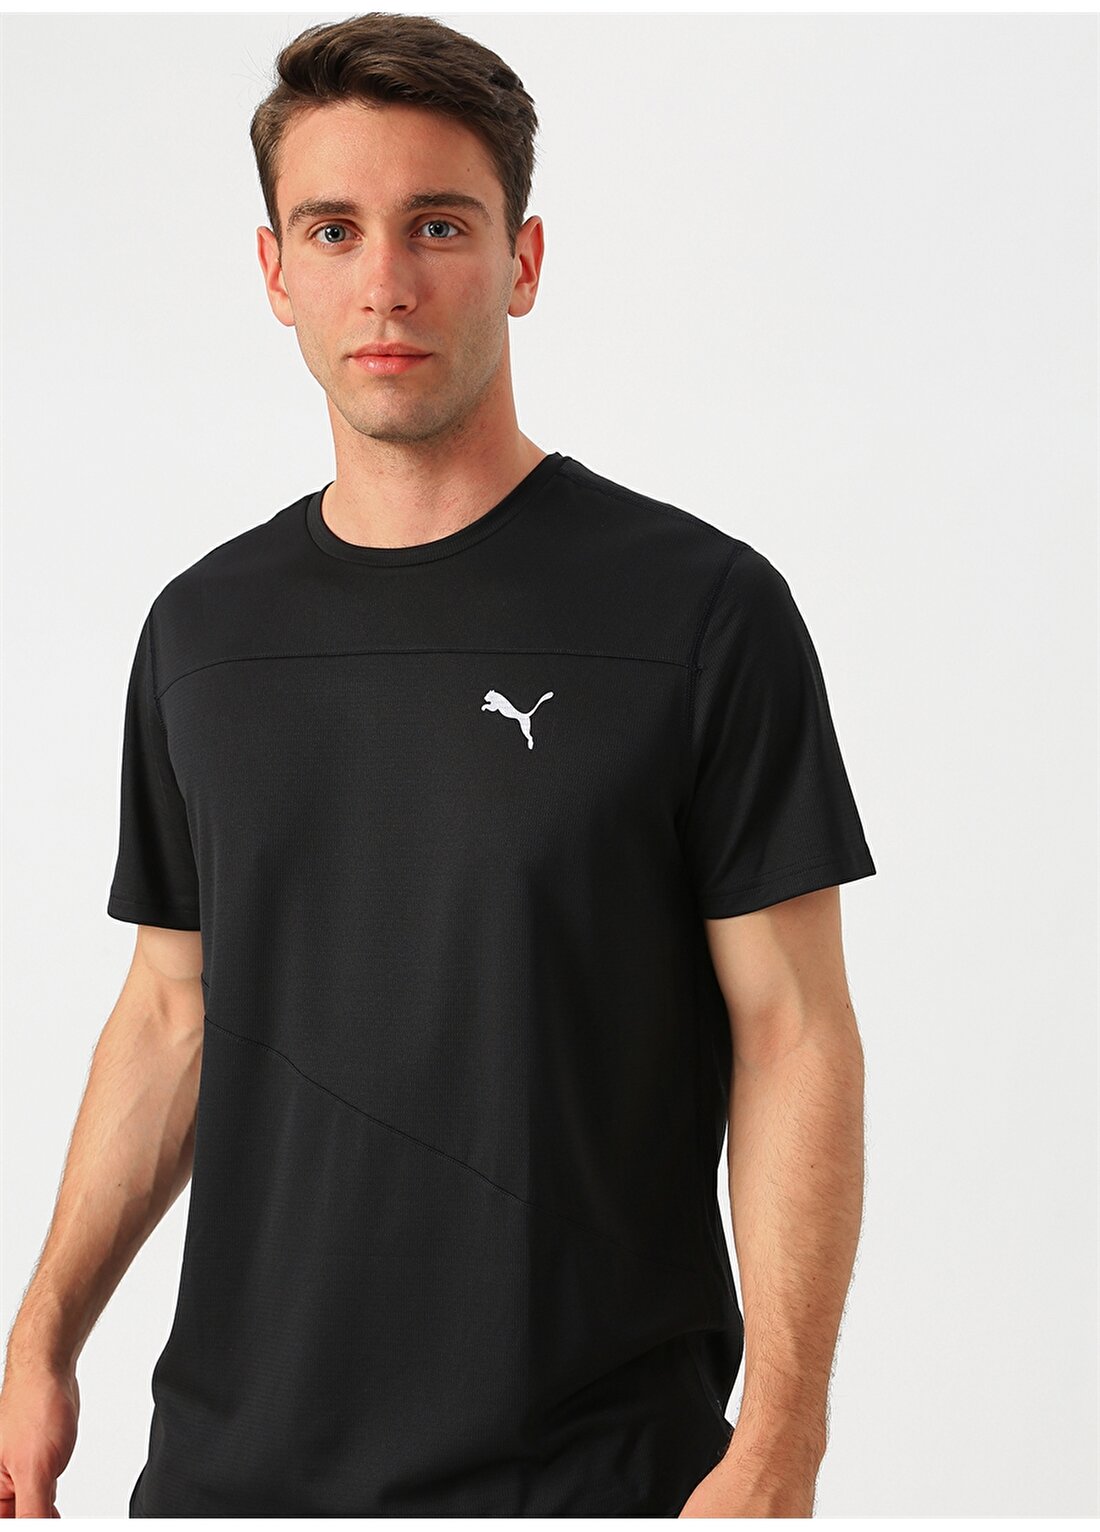 Puma Ignite Black T-Shirt